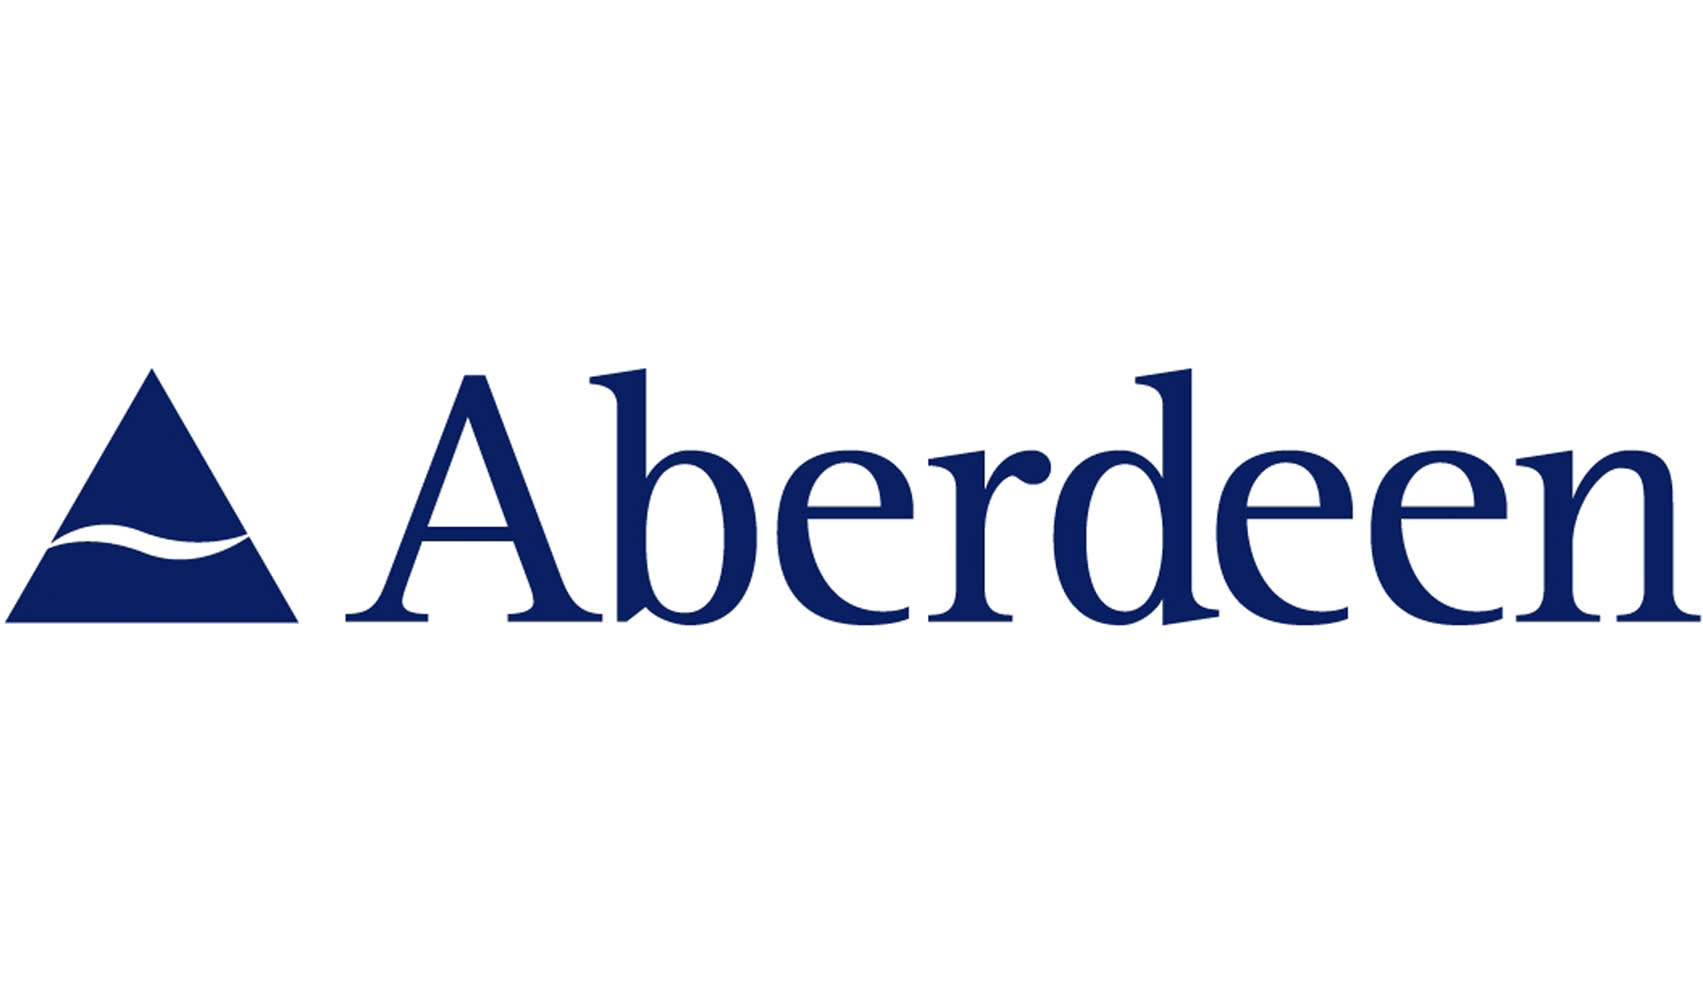 Aberdeen’s Young dismisses retirement talk - FTAdviser.com
